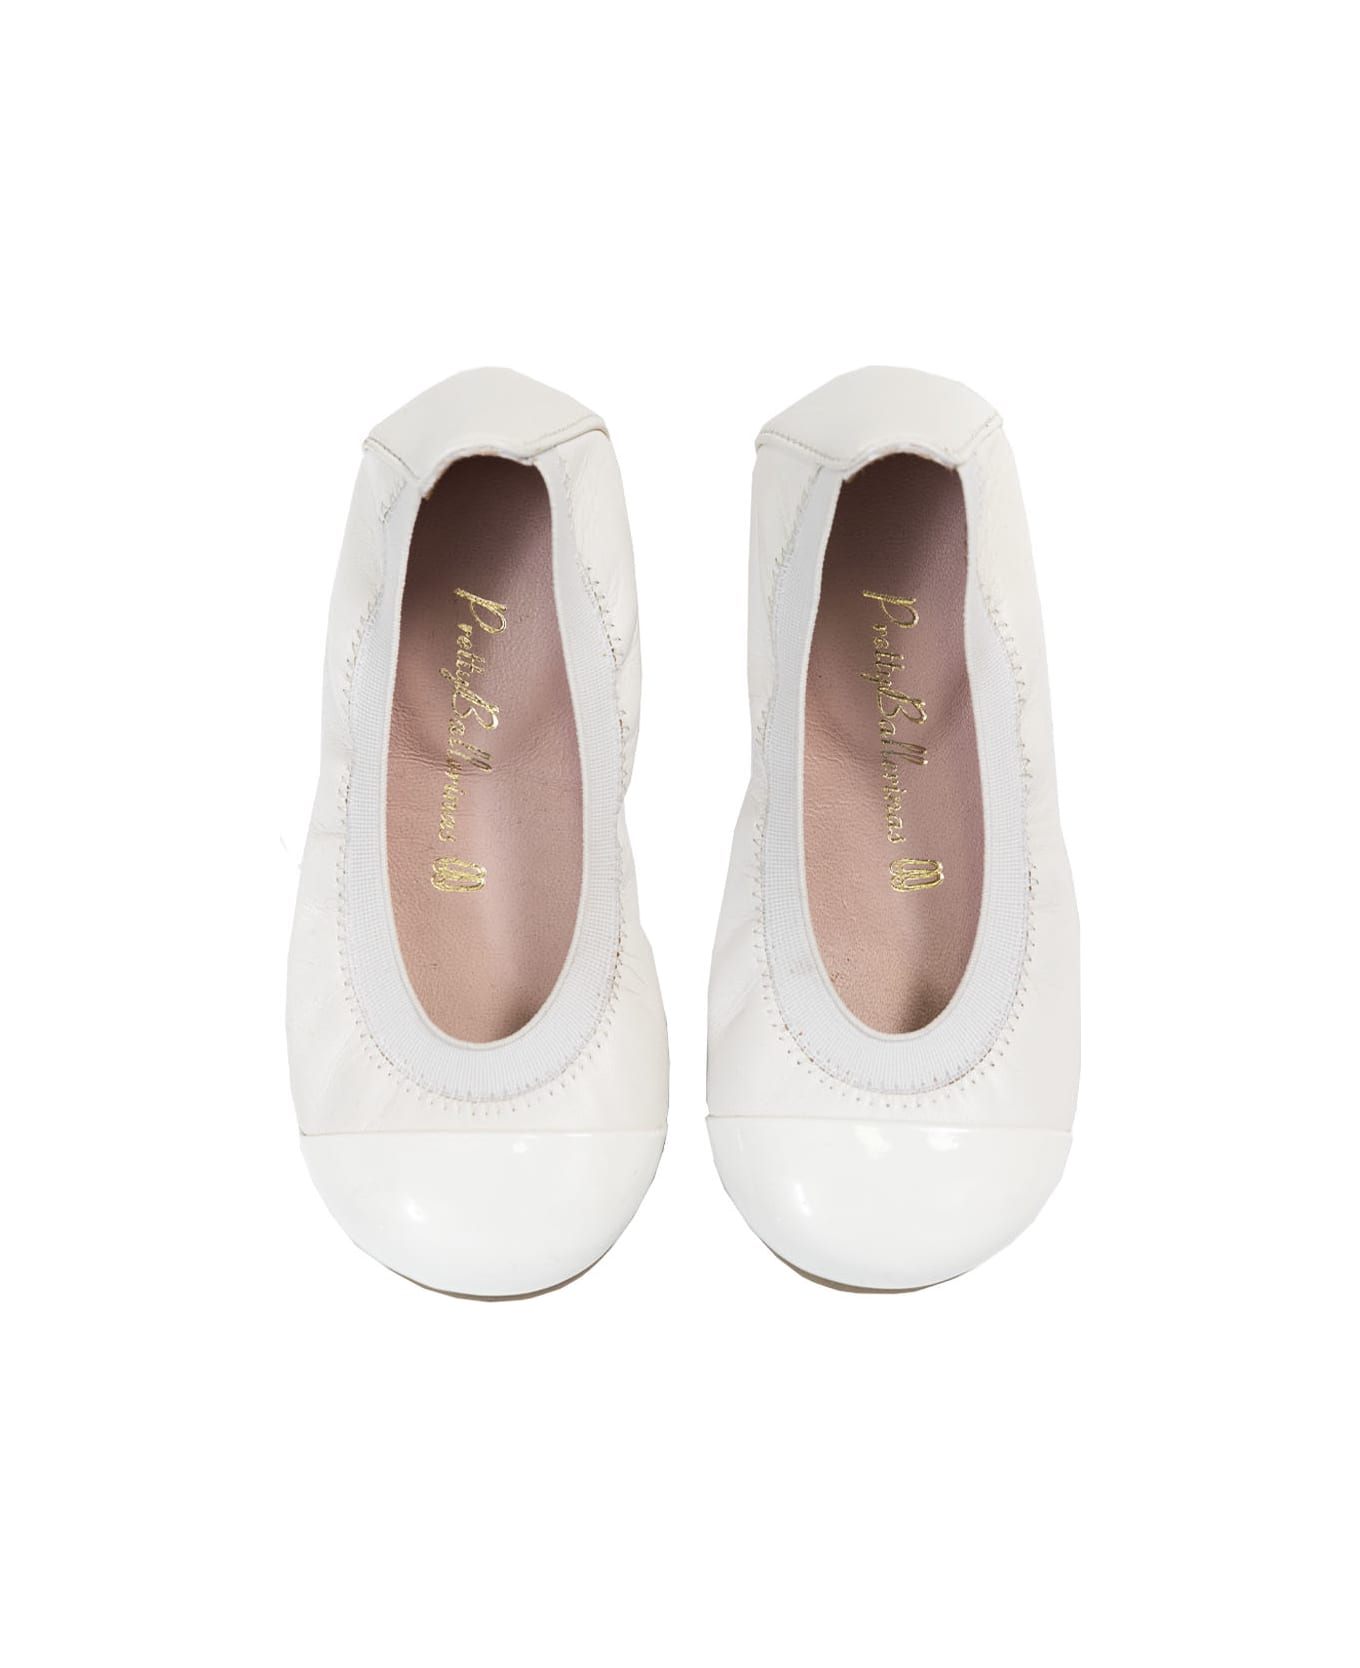 Pretty Ballerinas Leather Ballet Flats - White